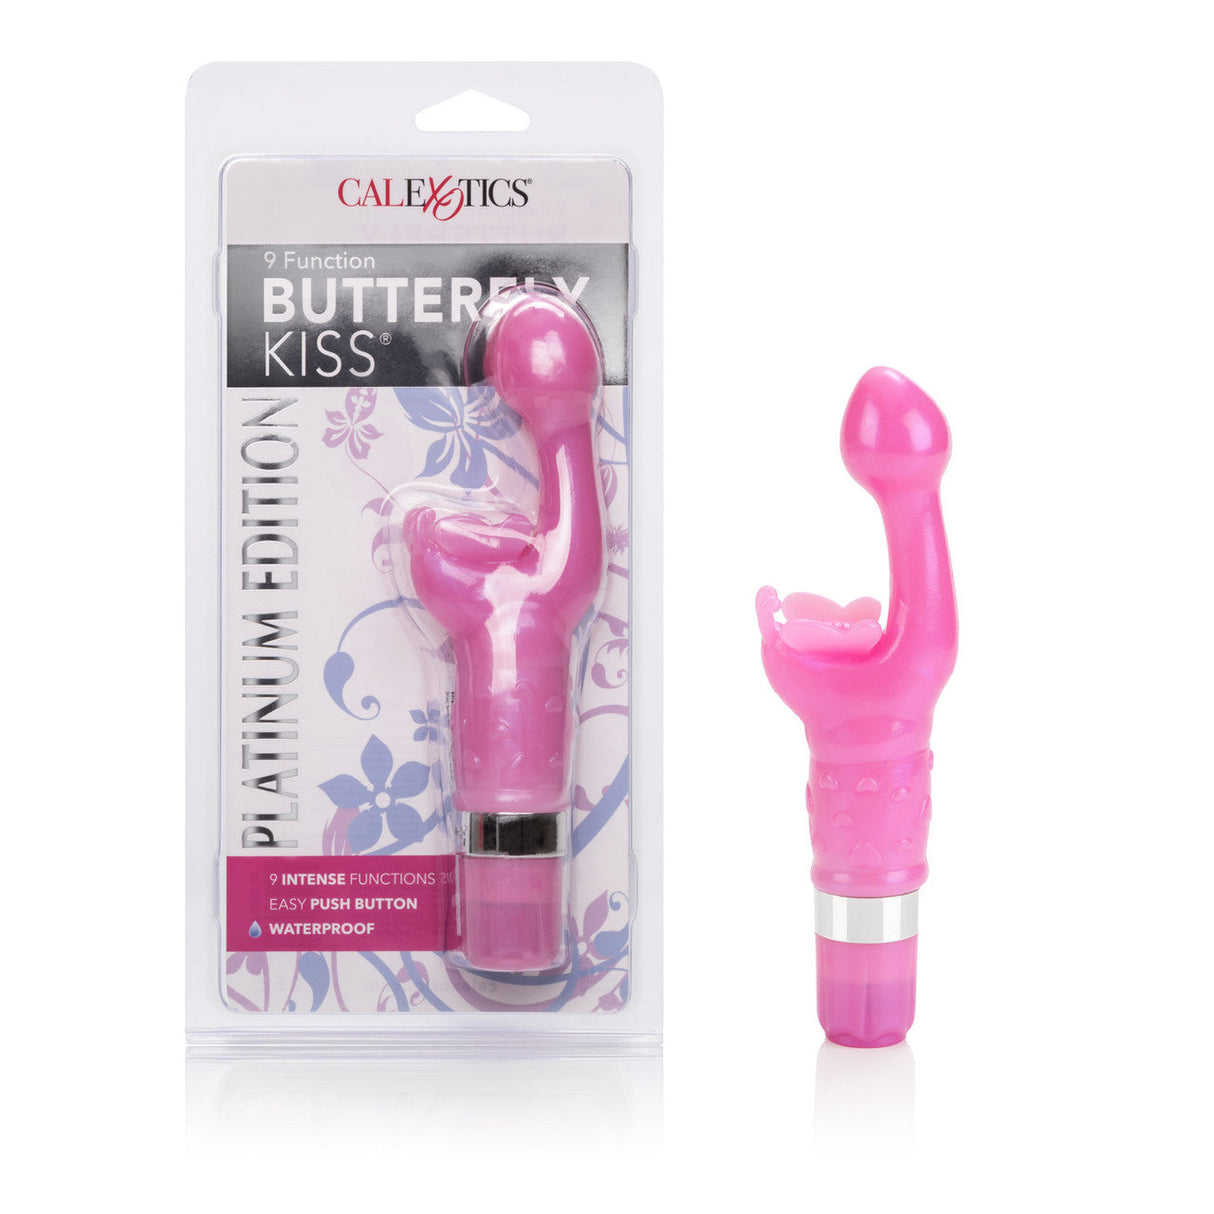 Platinum Butterfly Kiss Vibrator